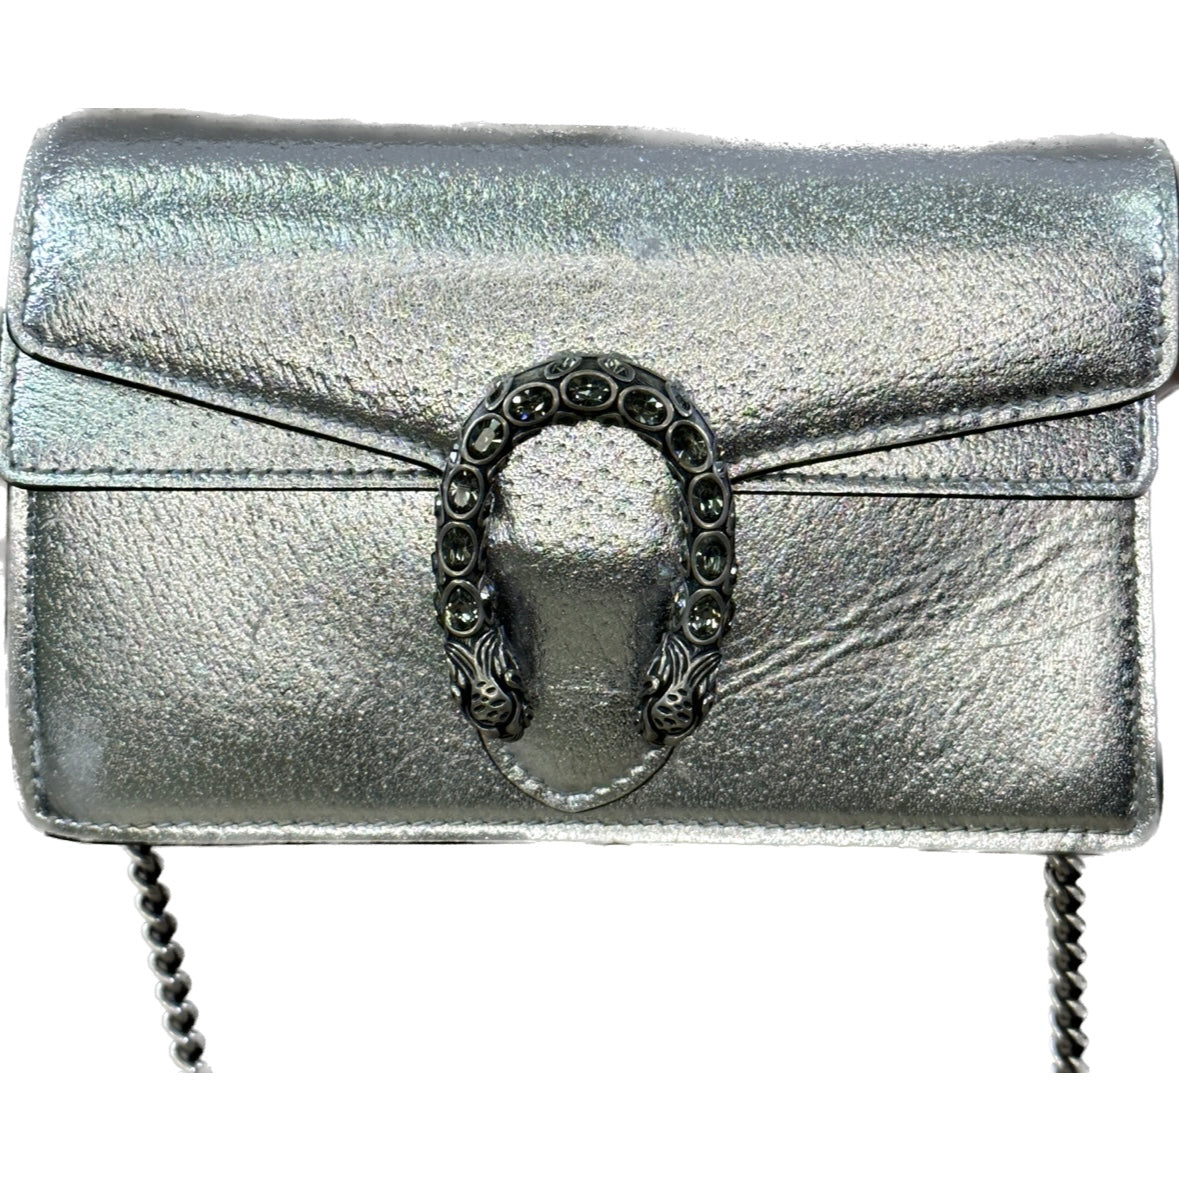 Gucci Dionysus Super Mini Metallic Leather Shoulder Bag - Gold